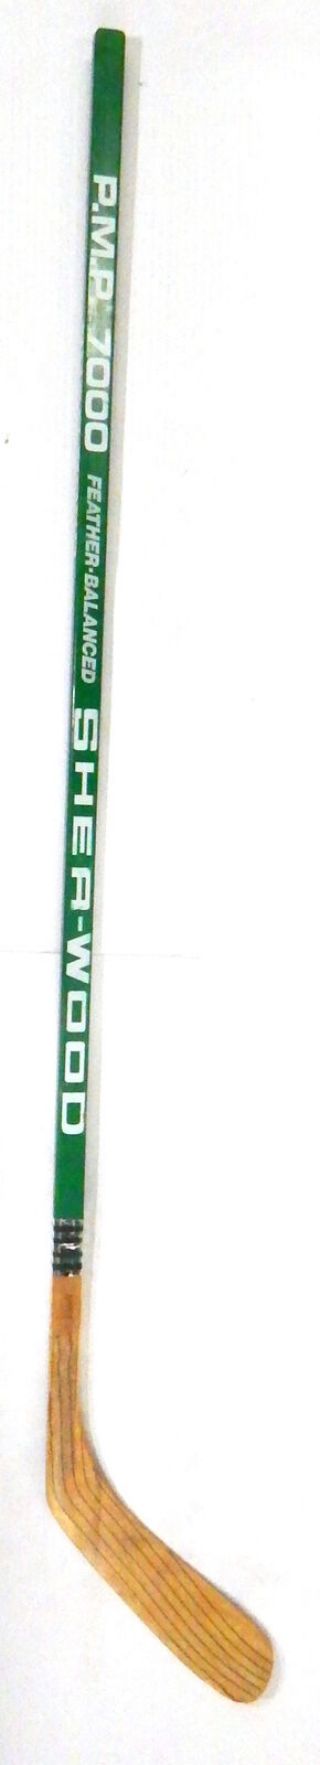 Sher - Wood P.  M.  P.  7000 Miller 9 Game - Hockey Stick